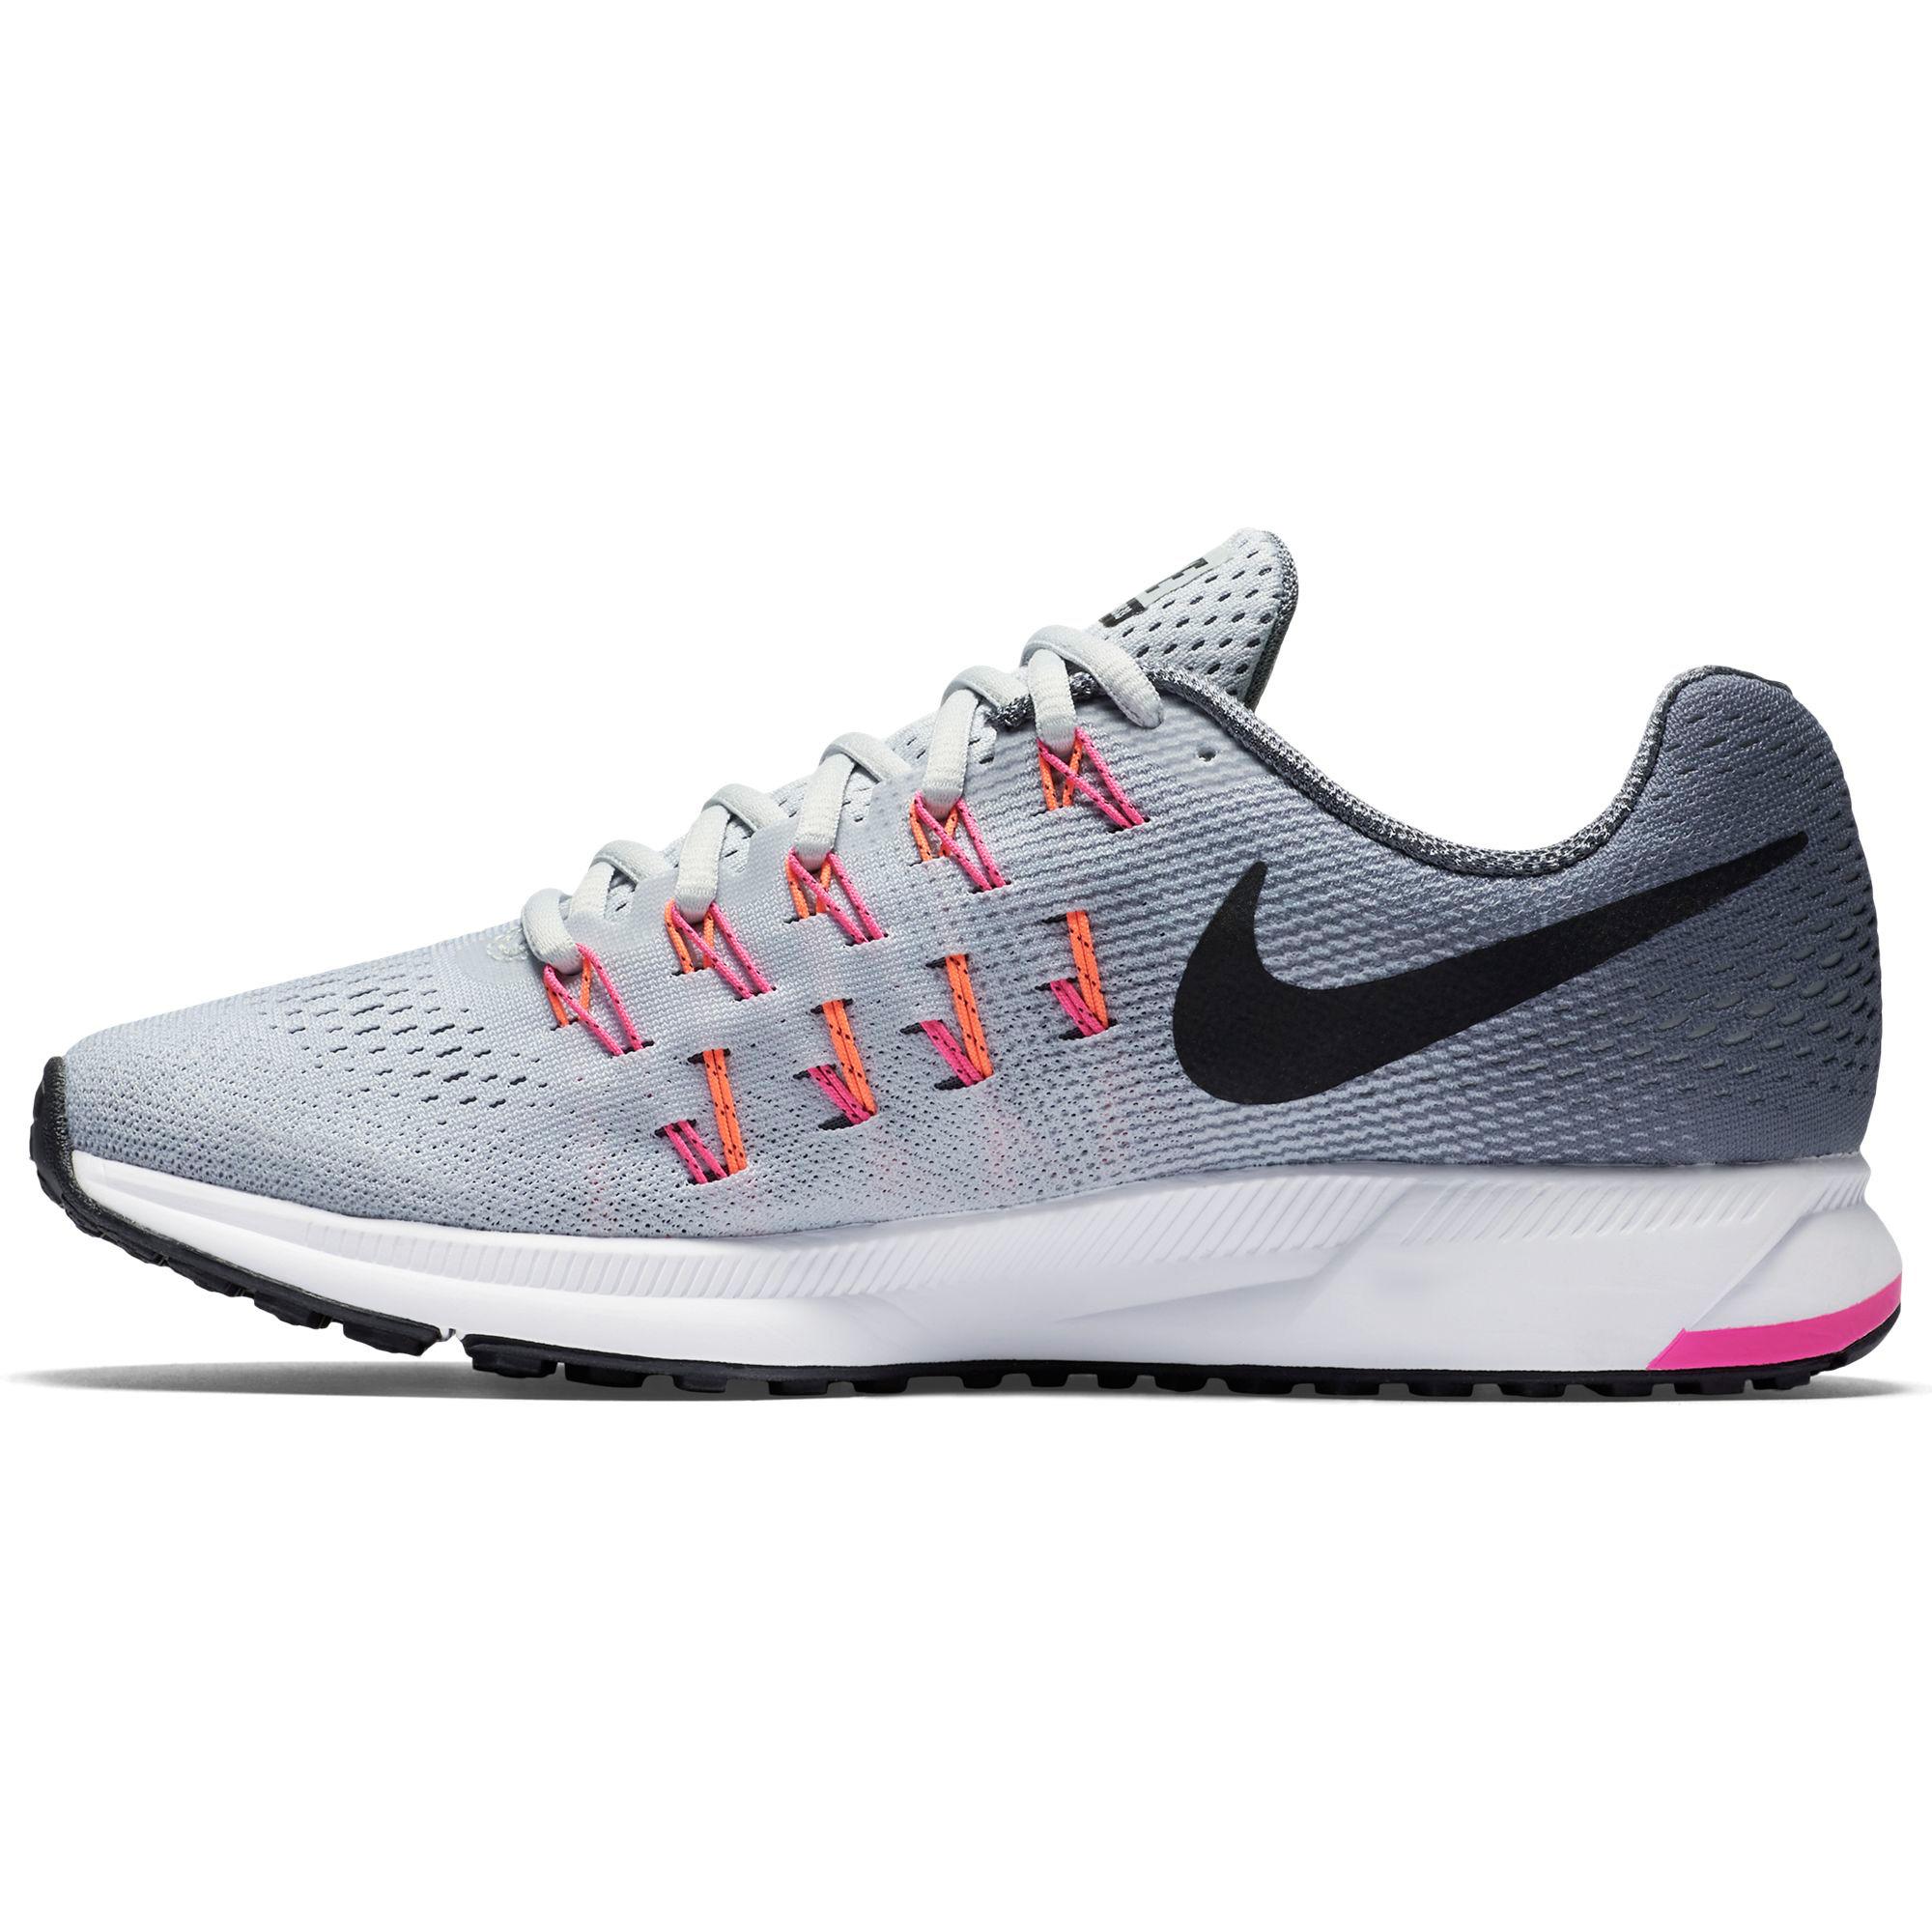 Nike Womens Air Zoom Pegasus 33 Running Shoes - Grey/Pink - Tennisnuts.com